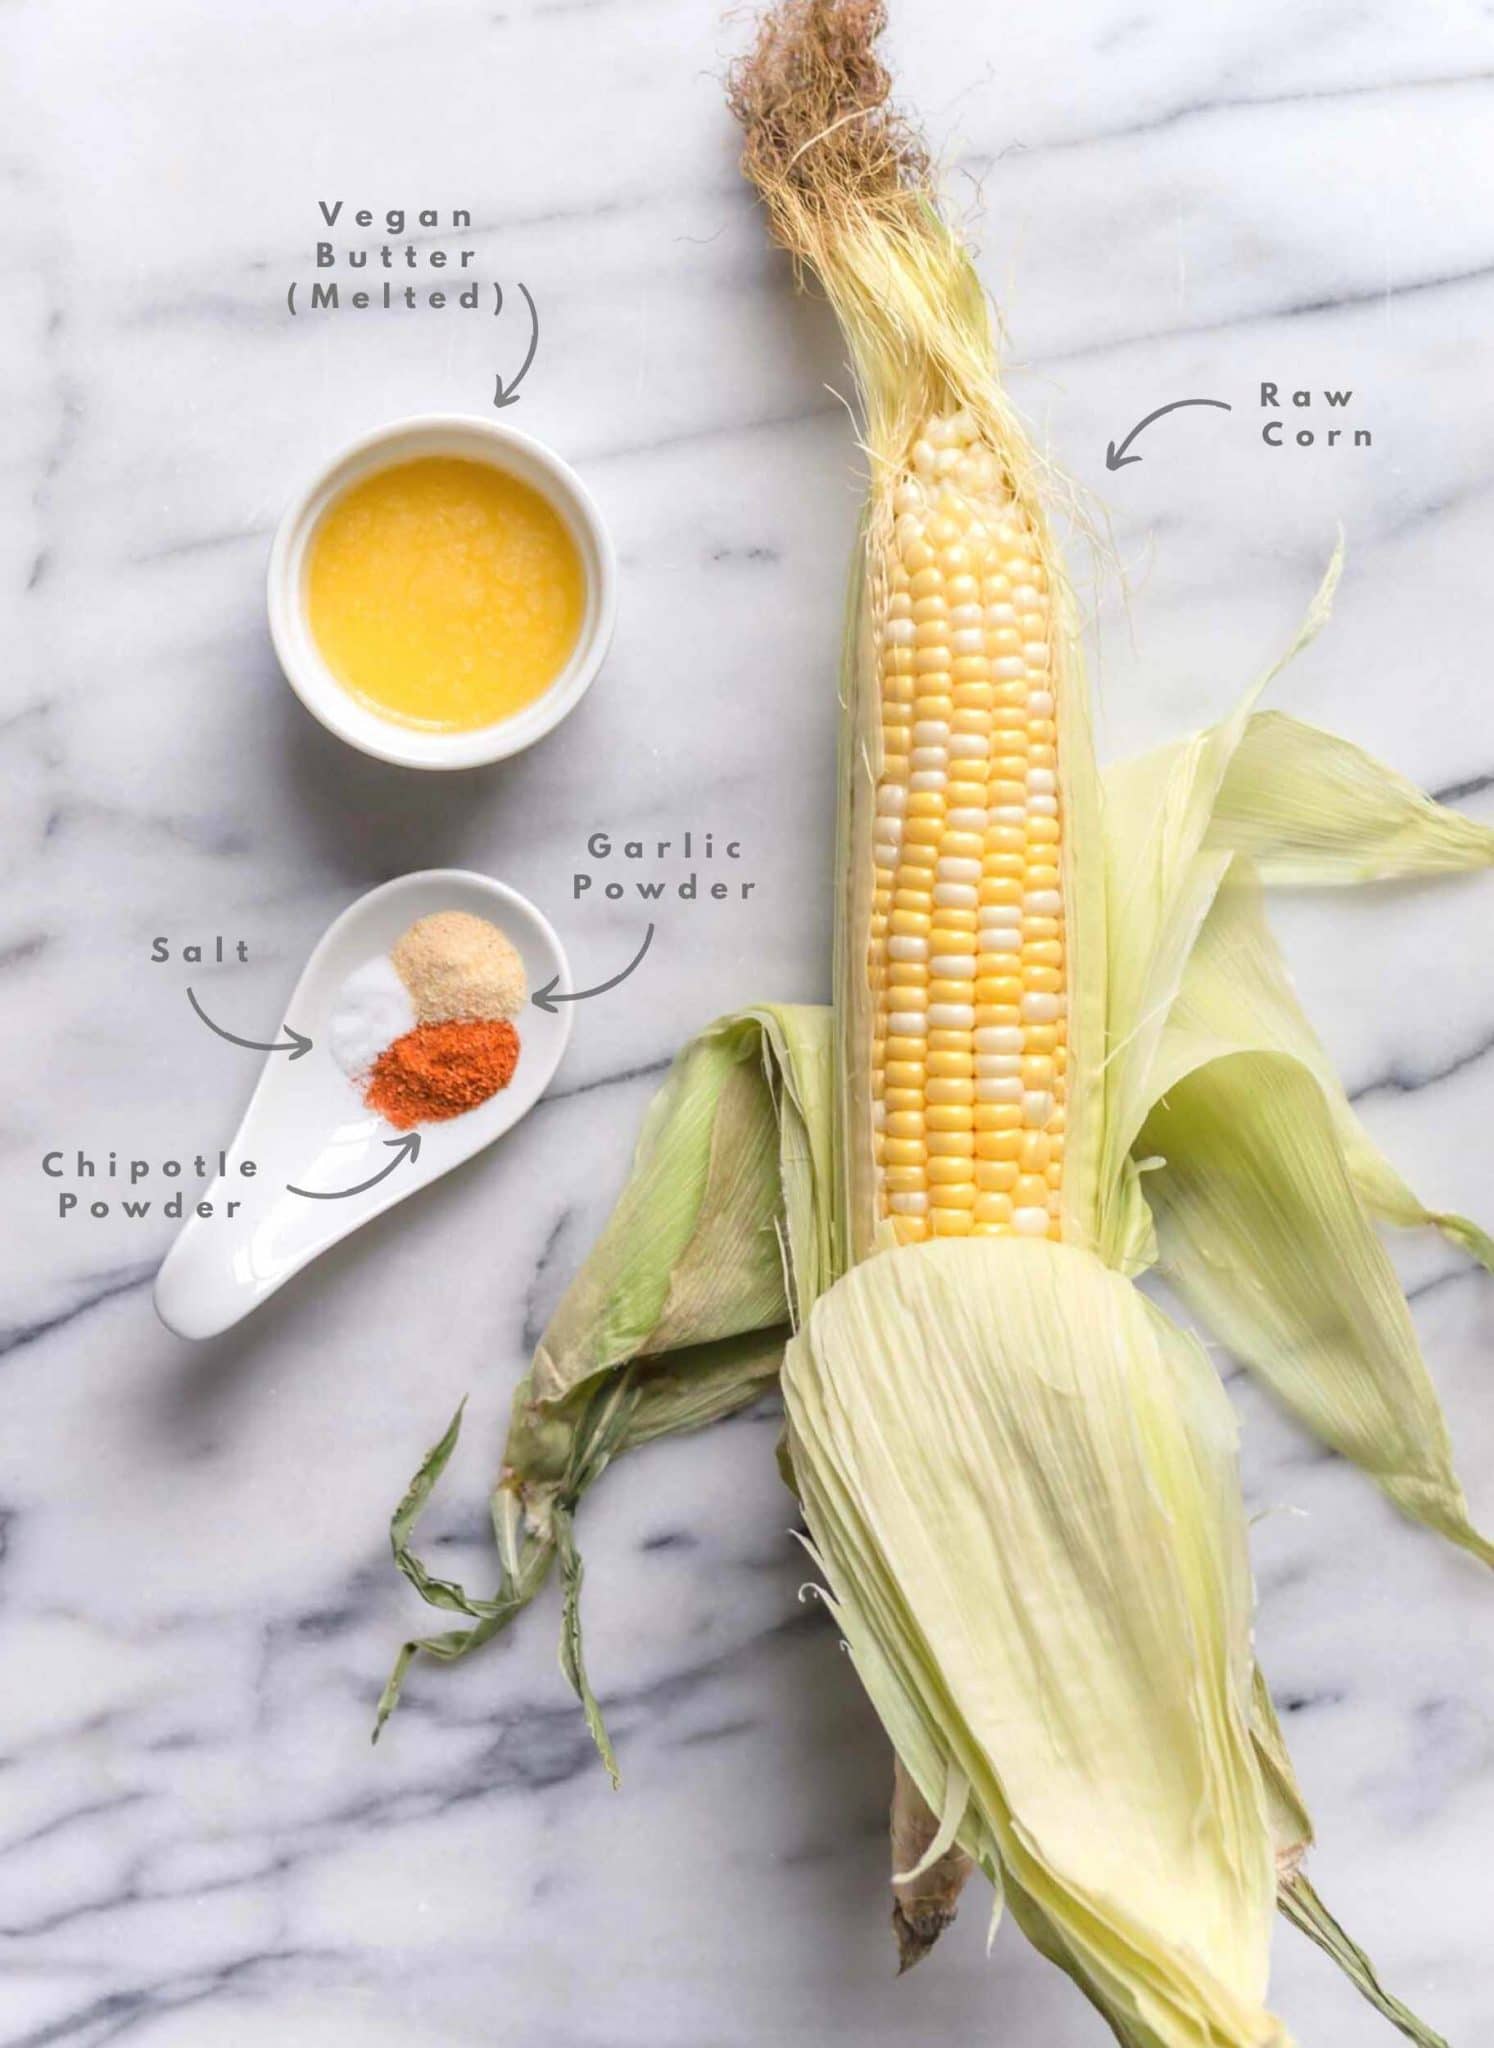 Vegan Corn Ribs Ingredients Flatlay With Cob of Corn Vegan Butter Chipotle Salt and Garlic Powder